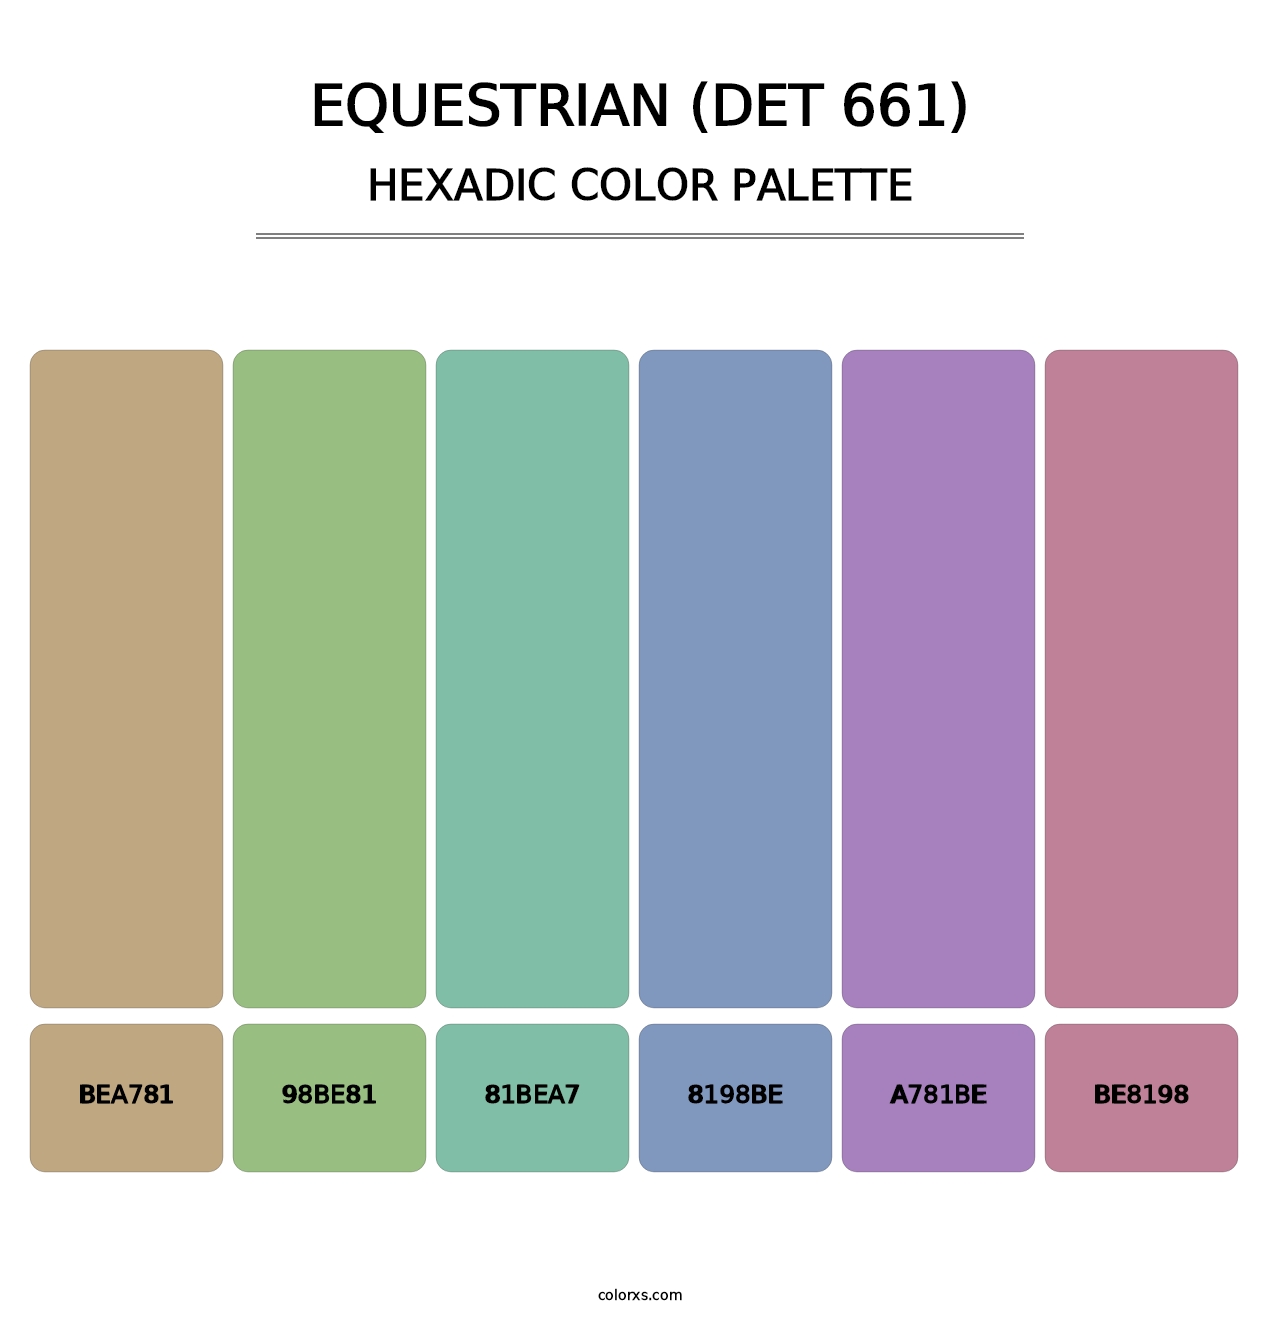 Equestrian (DET 661) - Hexadic Color Palette